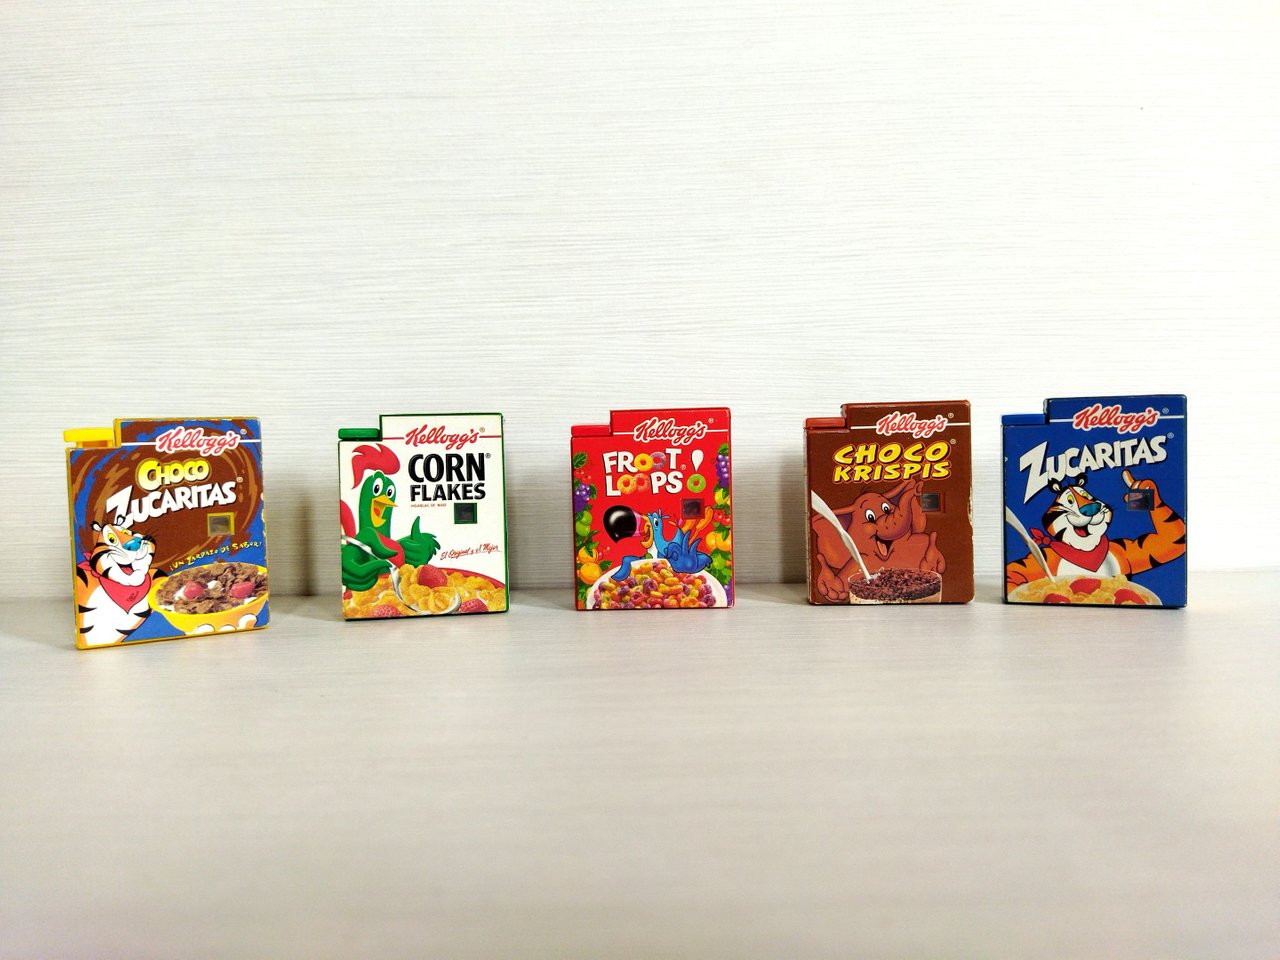 Mi colección de juguetes de cereales Kellogg's / My collection of Kellogg's  cereal toys